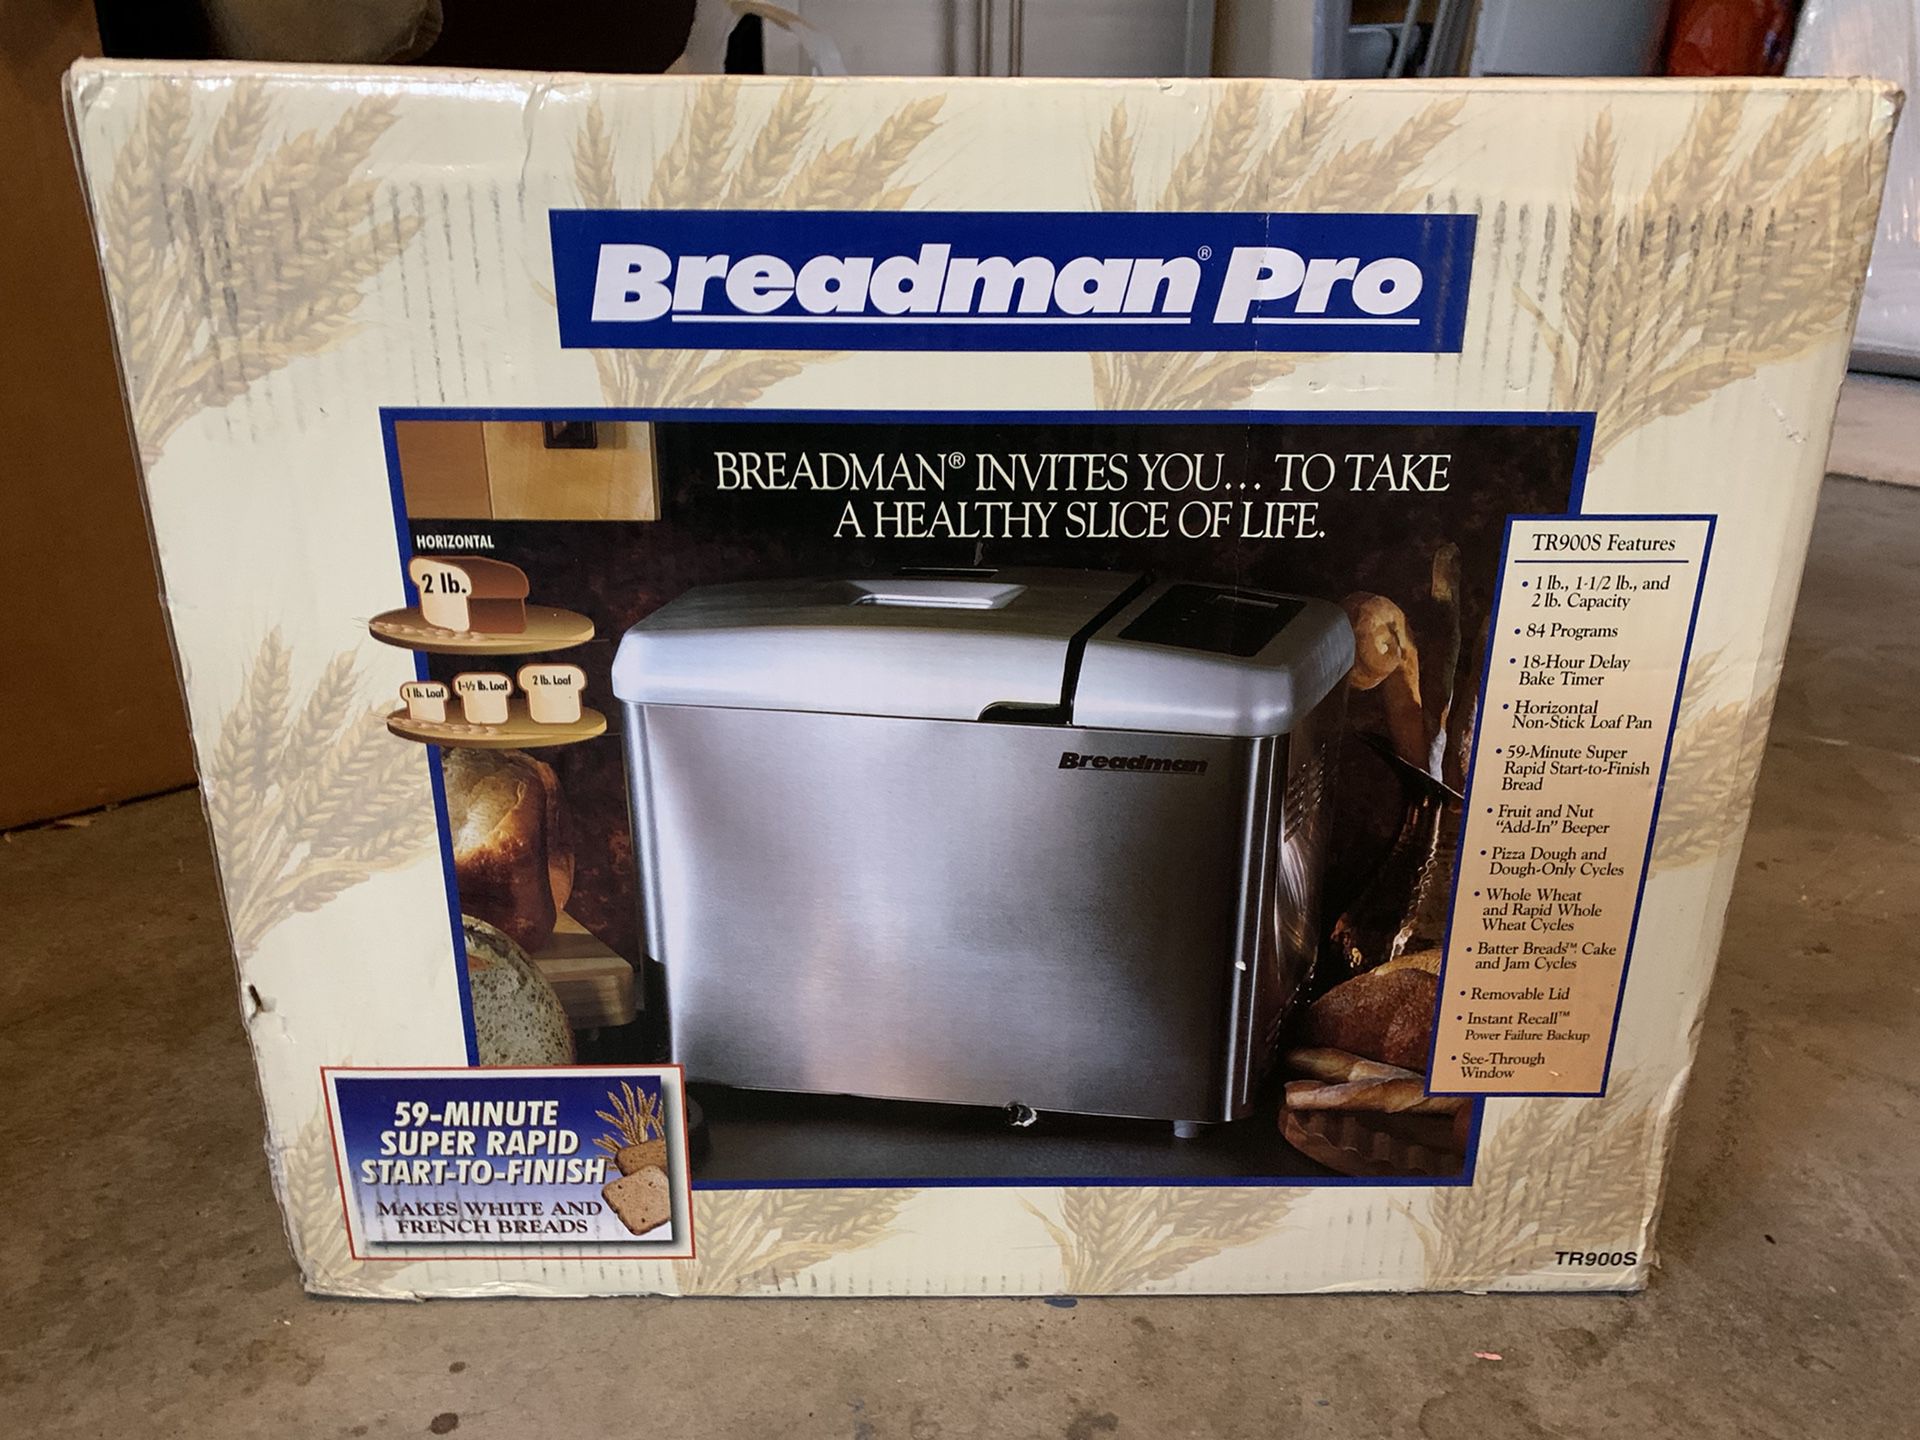 Breadman Pro bread maker